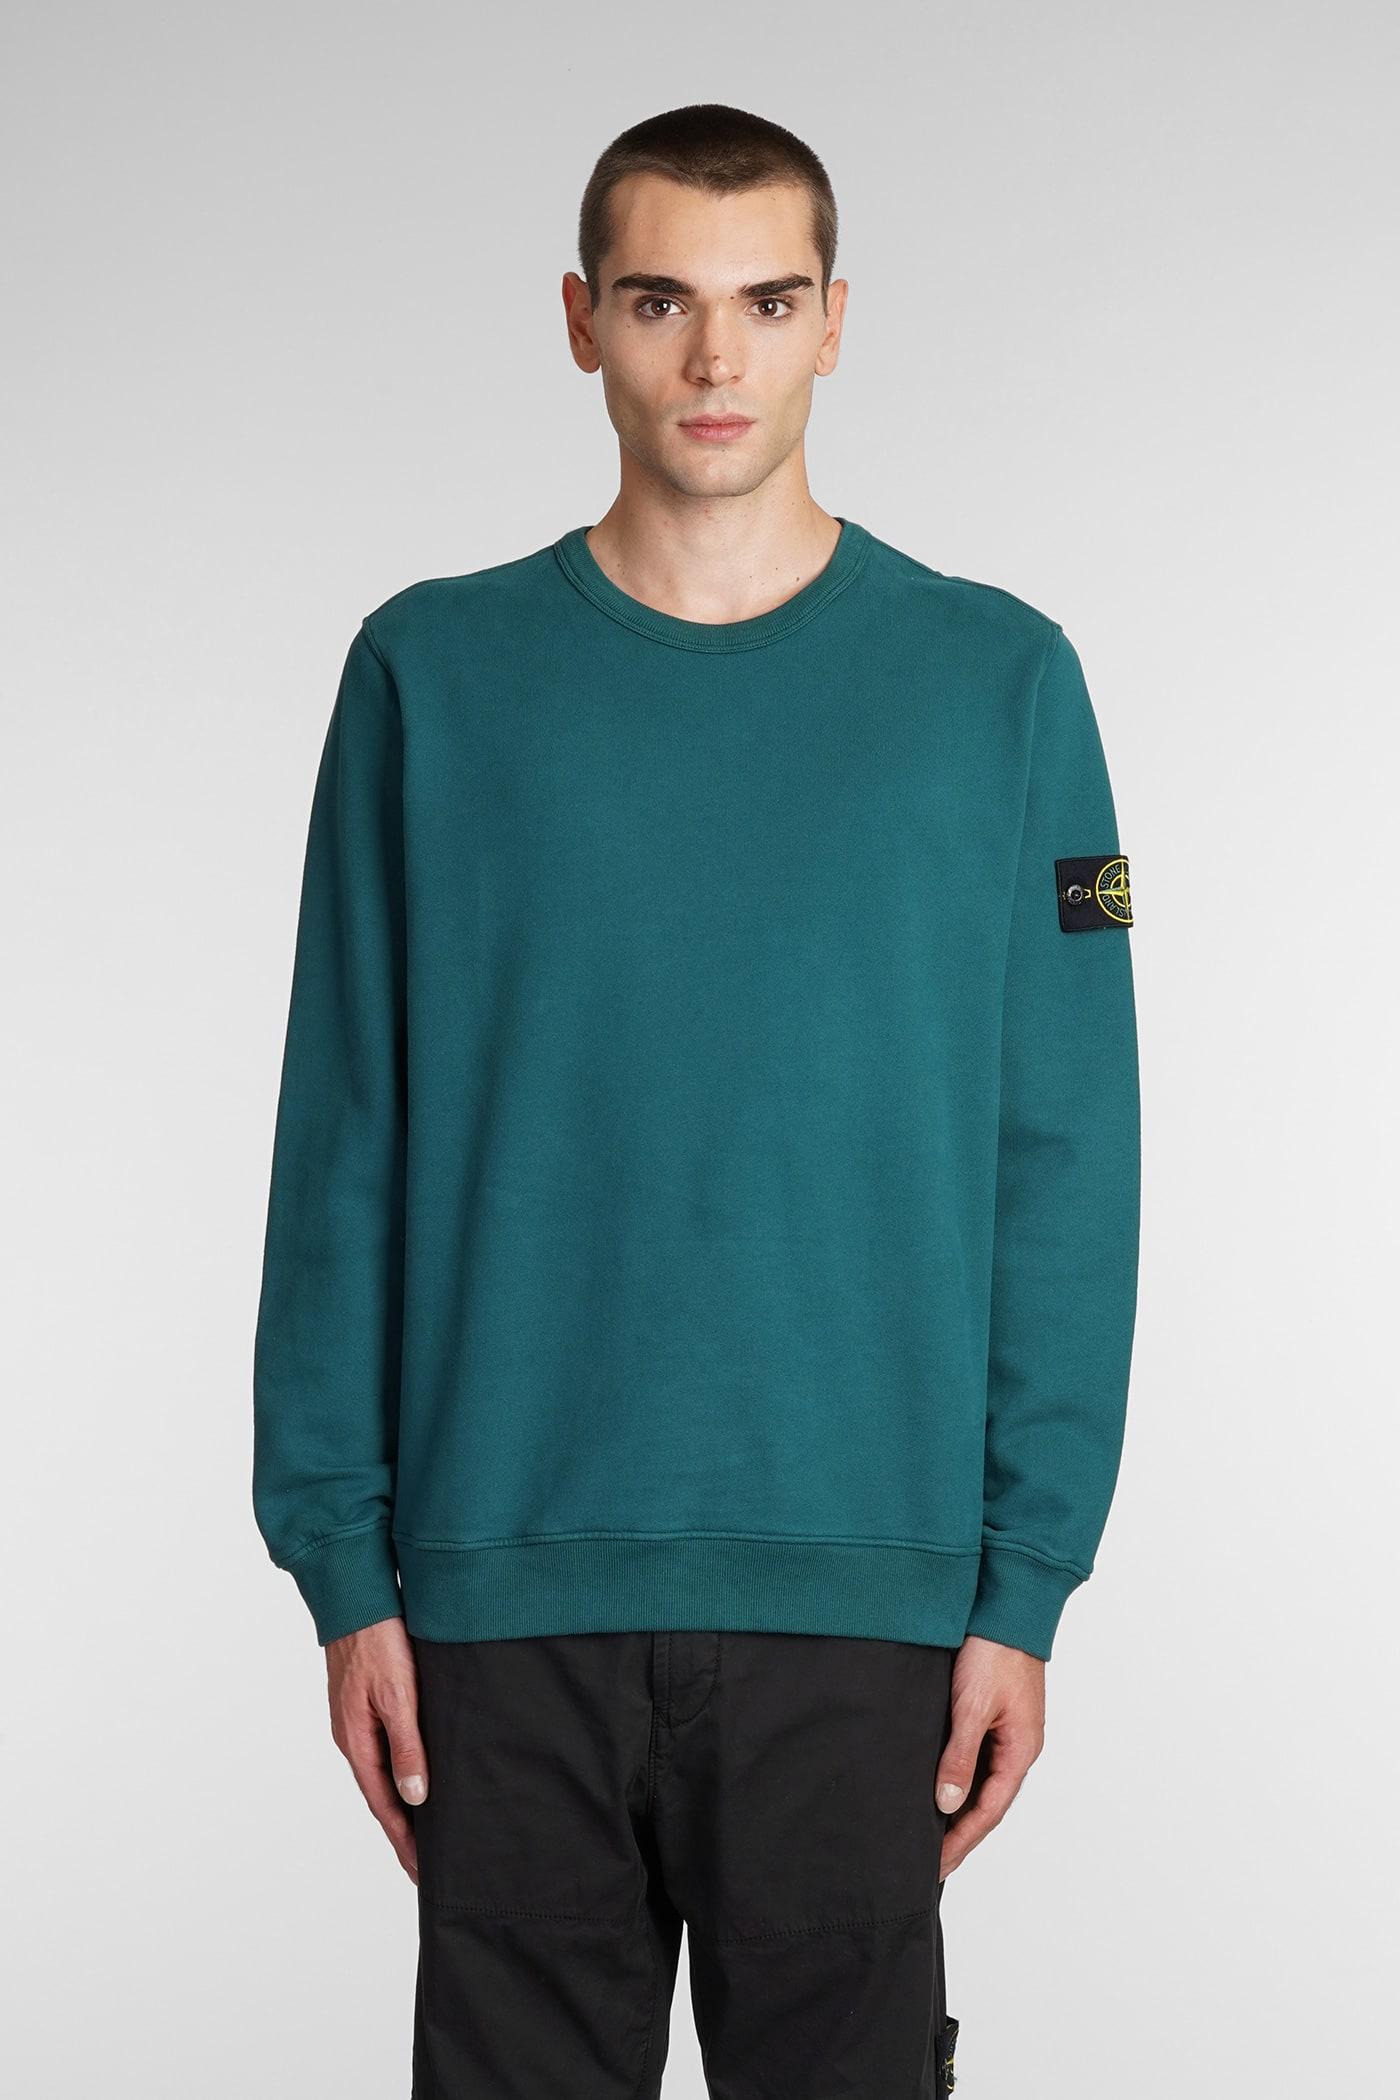 Stone Island Sweatshirt In Green Cotton for Men | Lyst